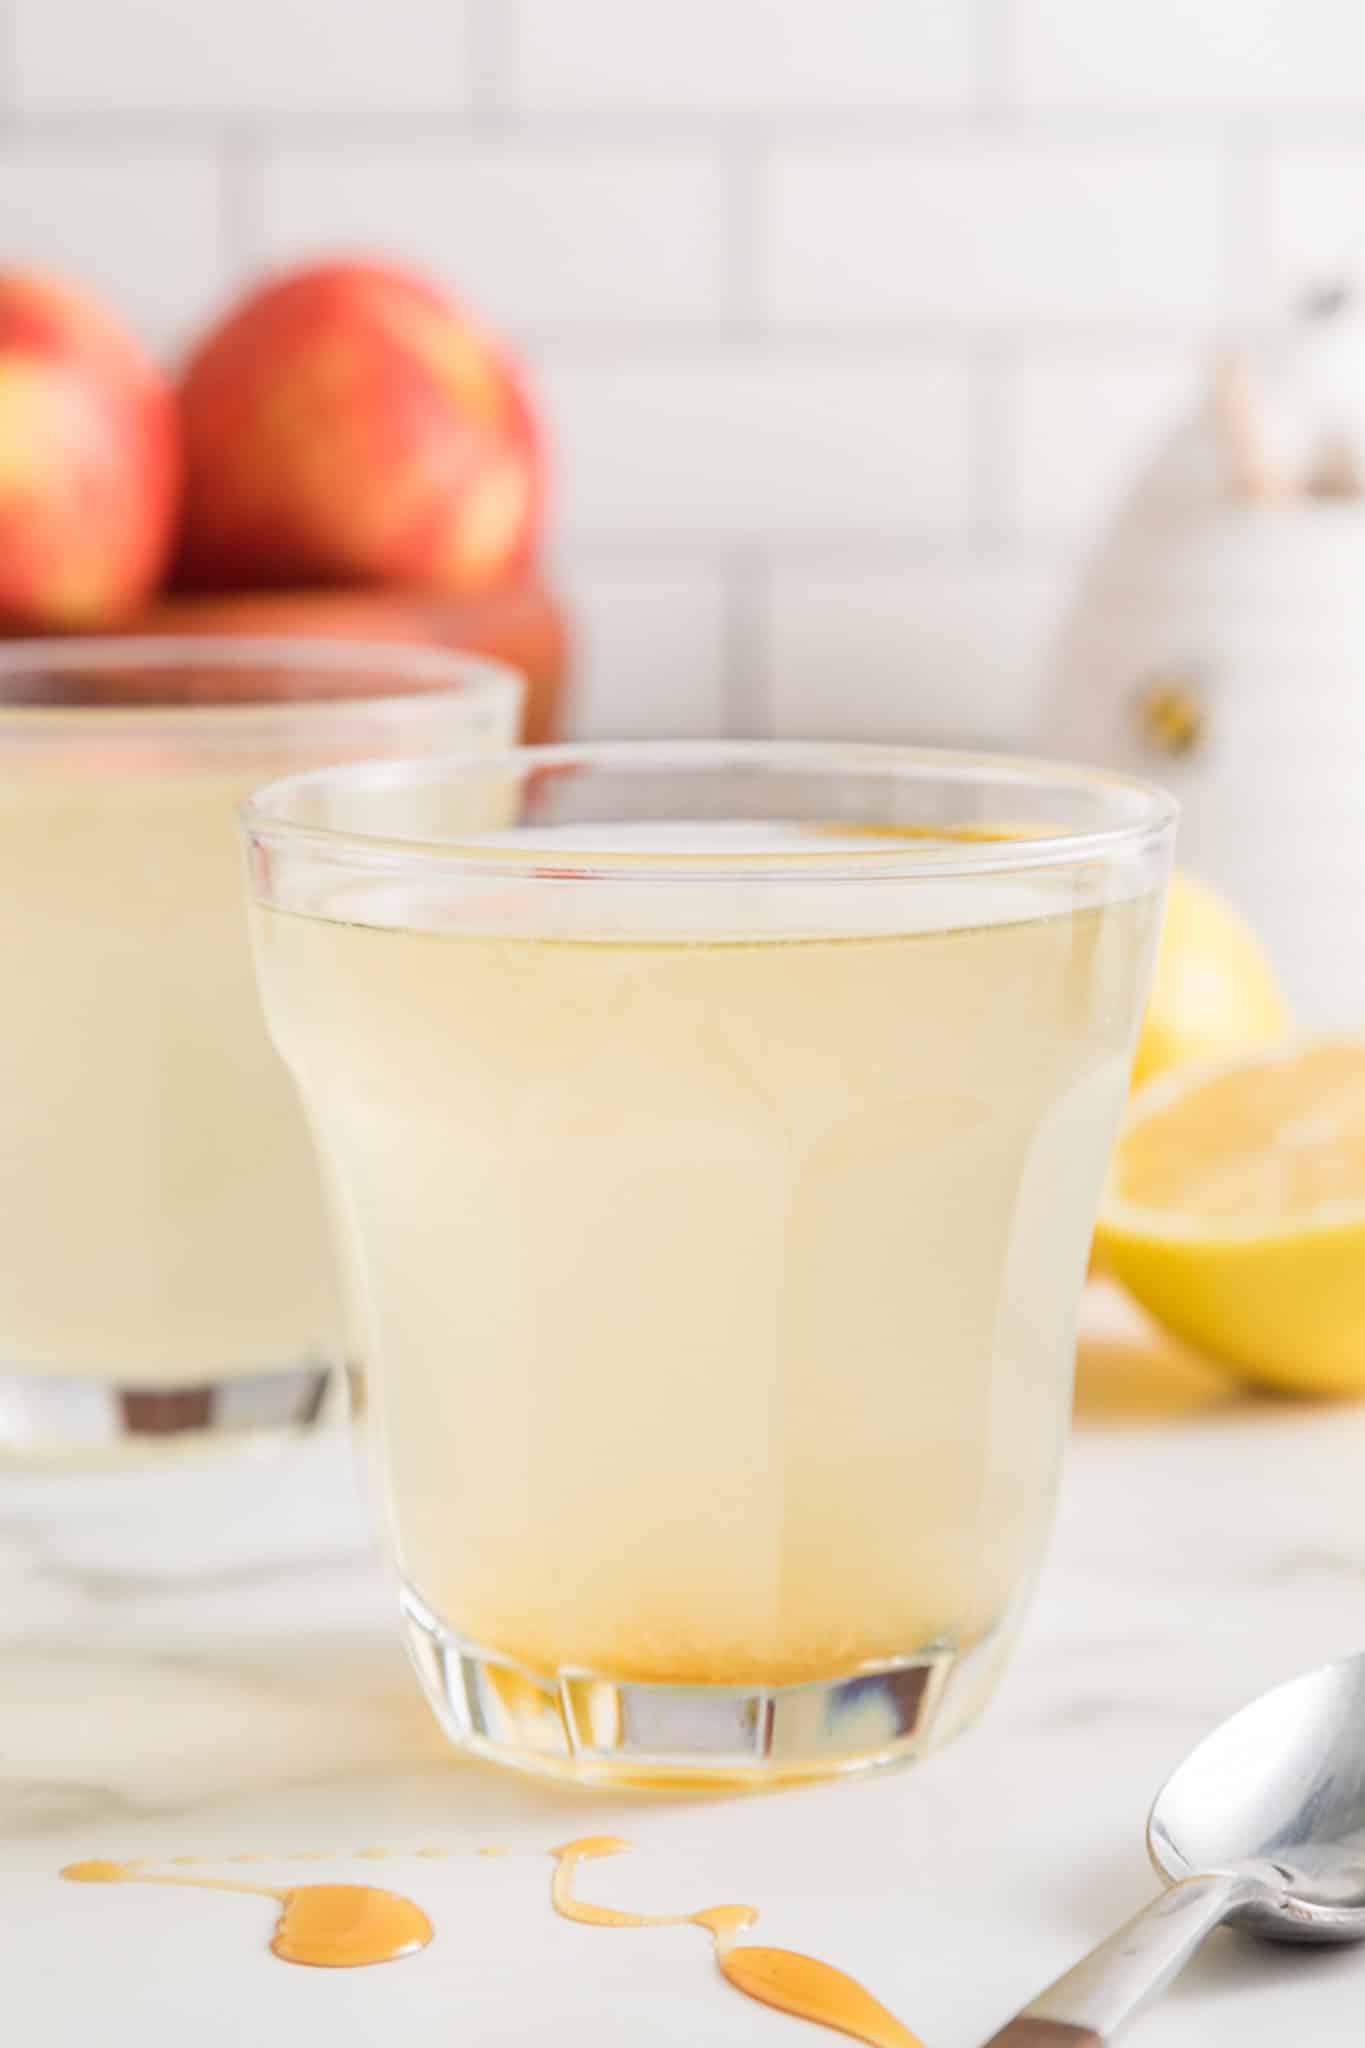 Apple cider vinegar drink in a glass with a floating lemon wheel.